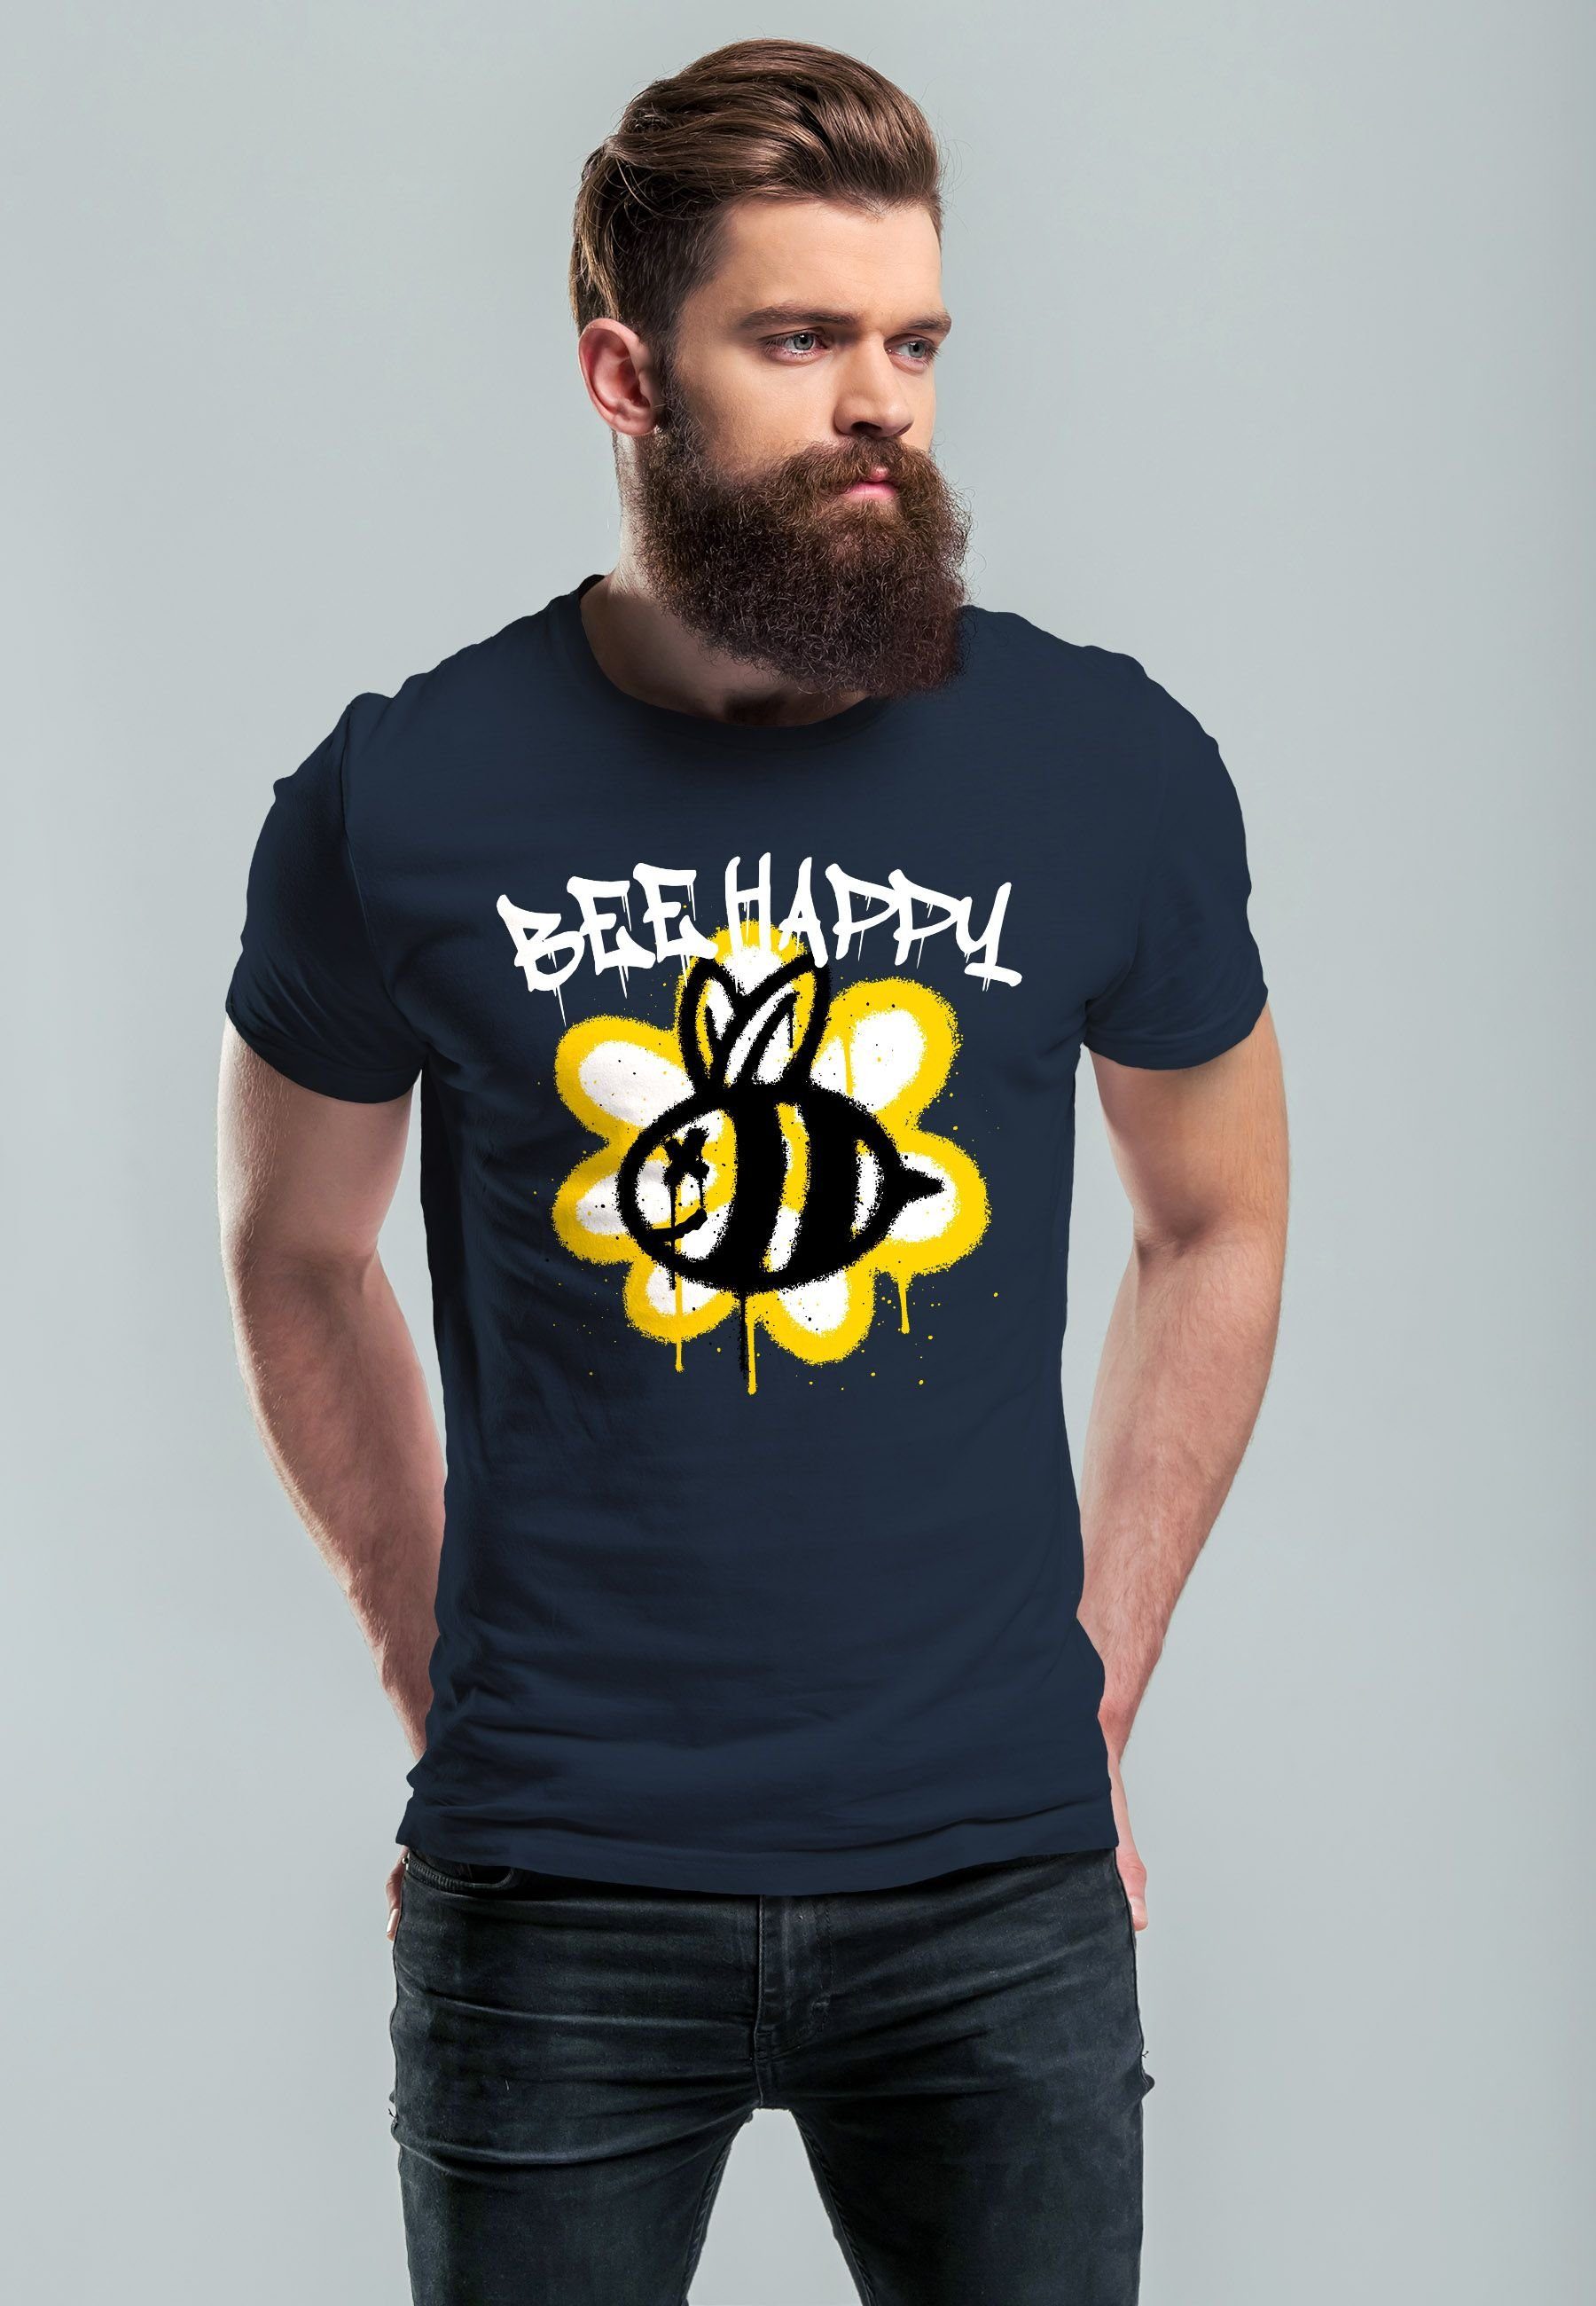 Graffiti Print Blume Aufdruck SchriftzugFashi T-Shirt Biene navy mit Bee Neverless Herren Happy Print-Shirt